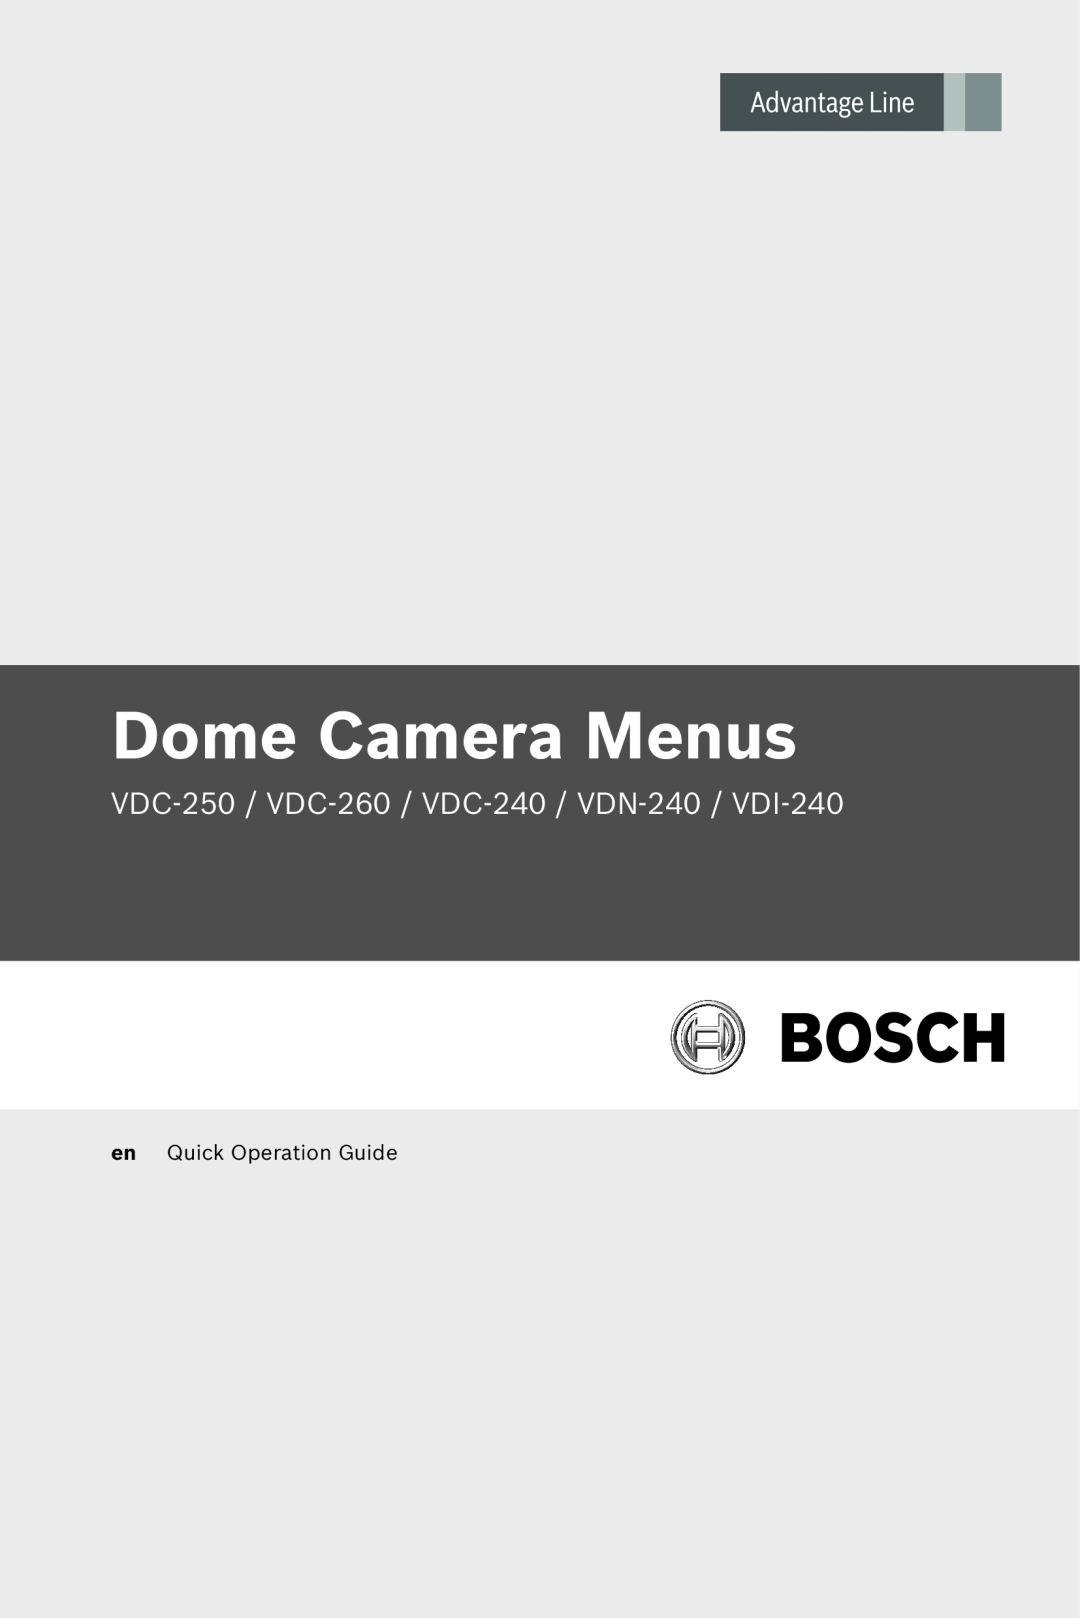 Bosch Appliances manual Dome Camera Menus, VDC-250 / VDC-260 / VDC-240 / VDN-240 / VDI-240, en Quick Operation Guide 